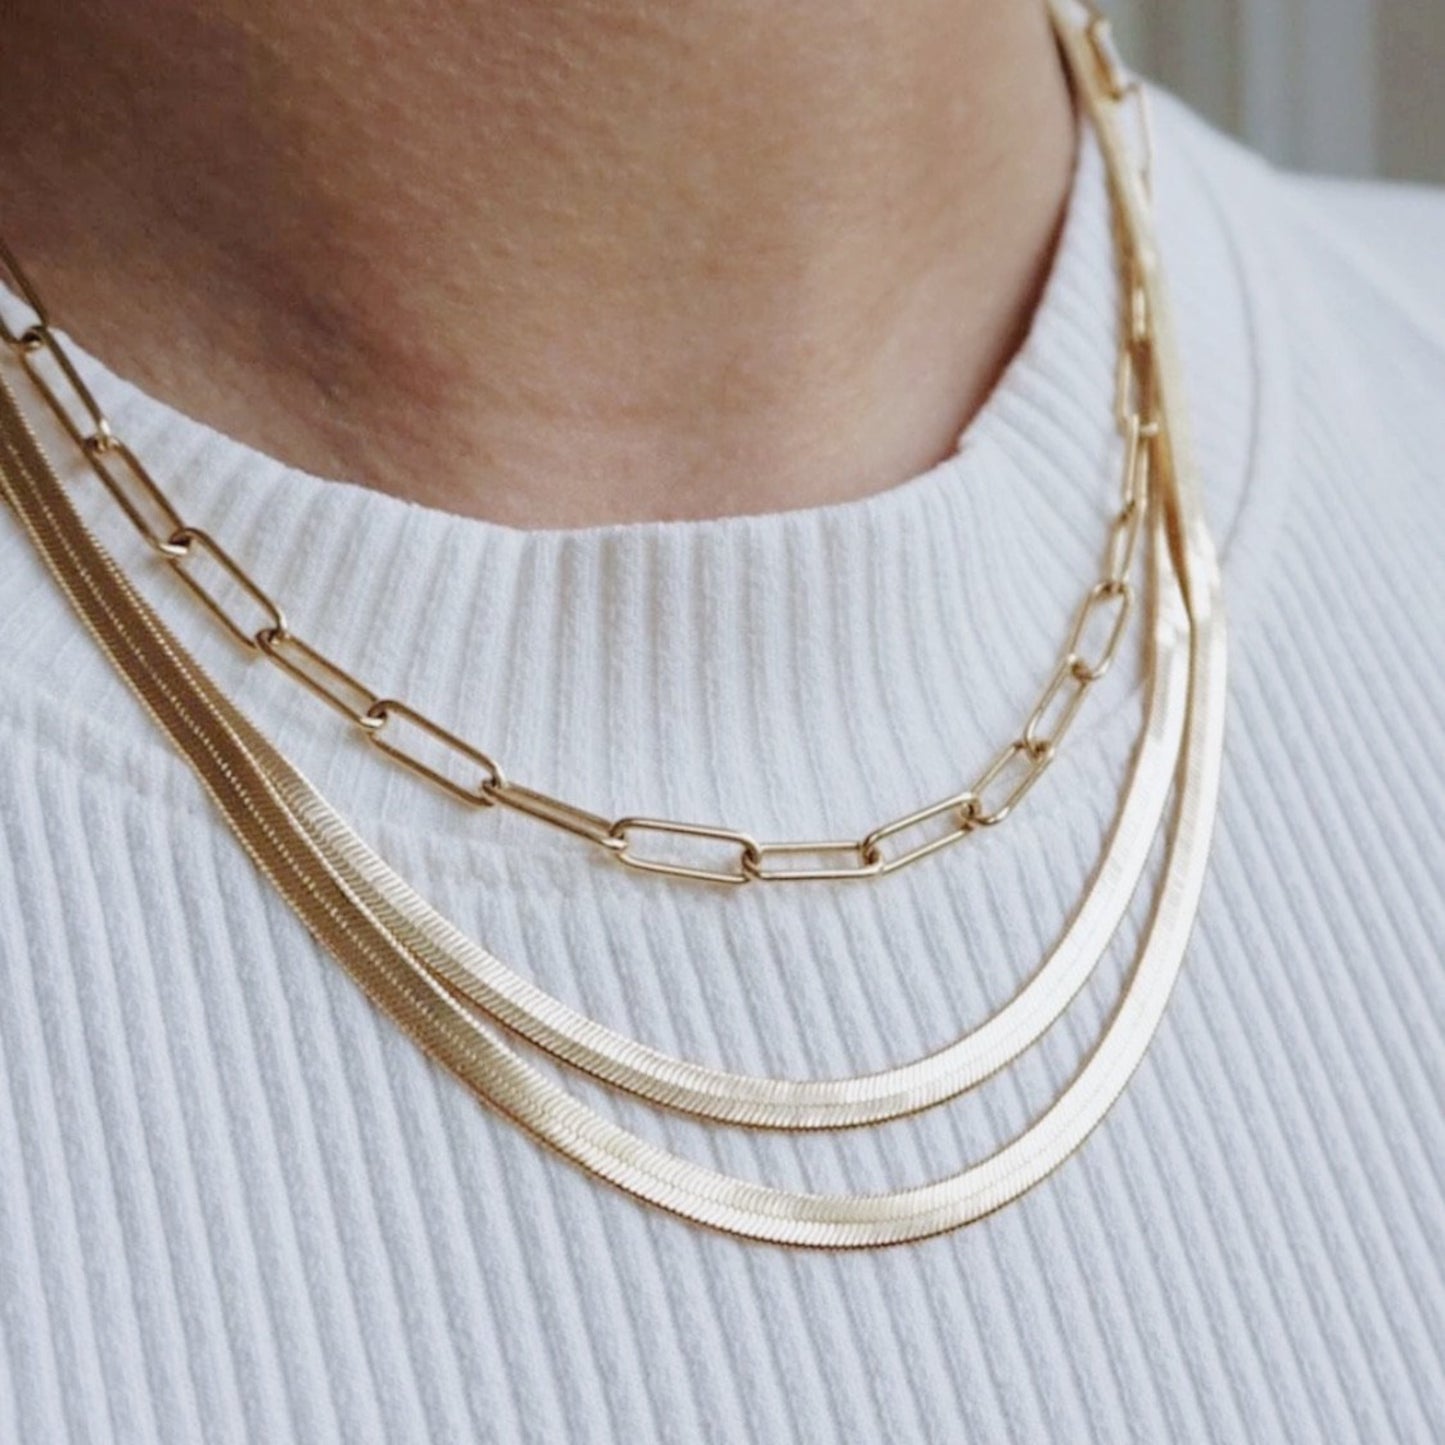 Herringbone Necklace, gold-plated 18K necklace. ISVI Boutique, Miami